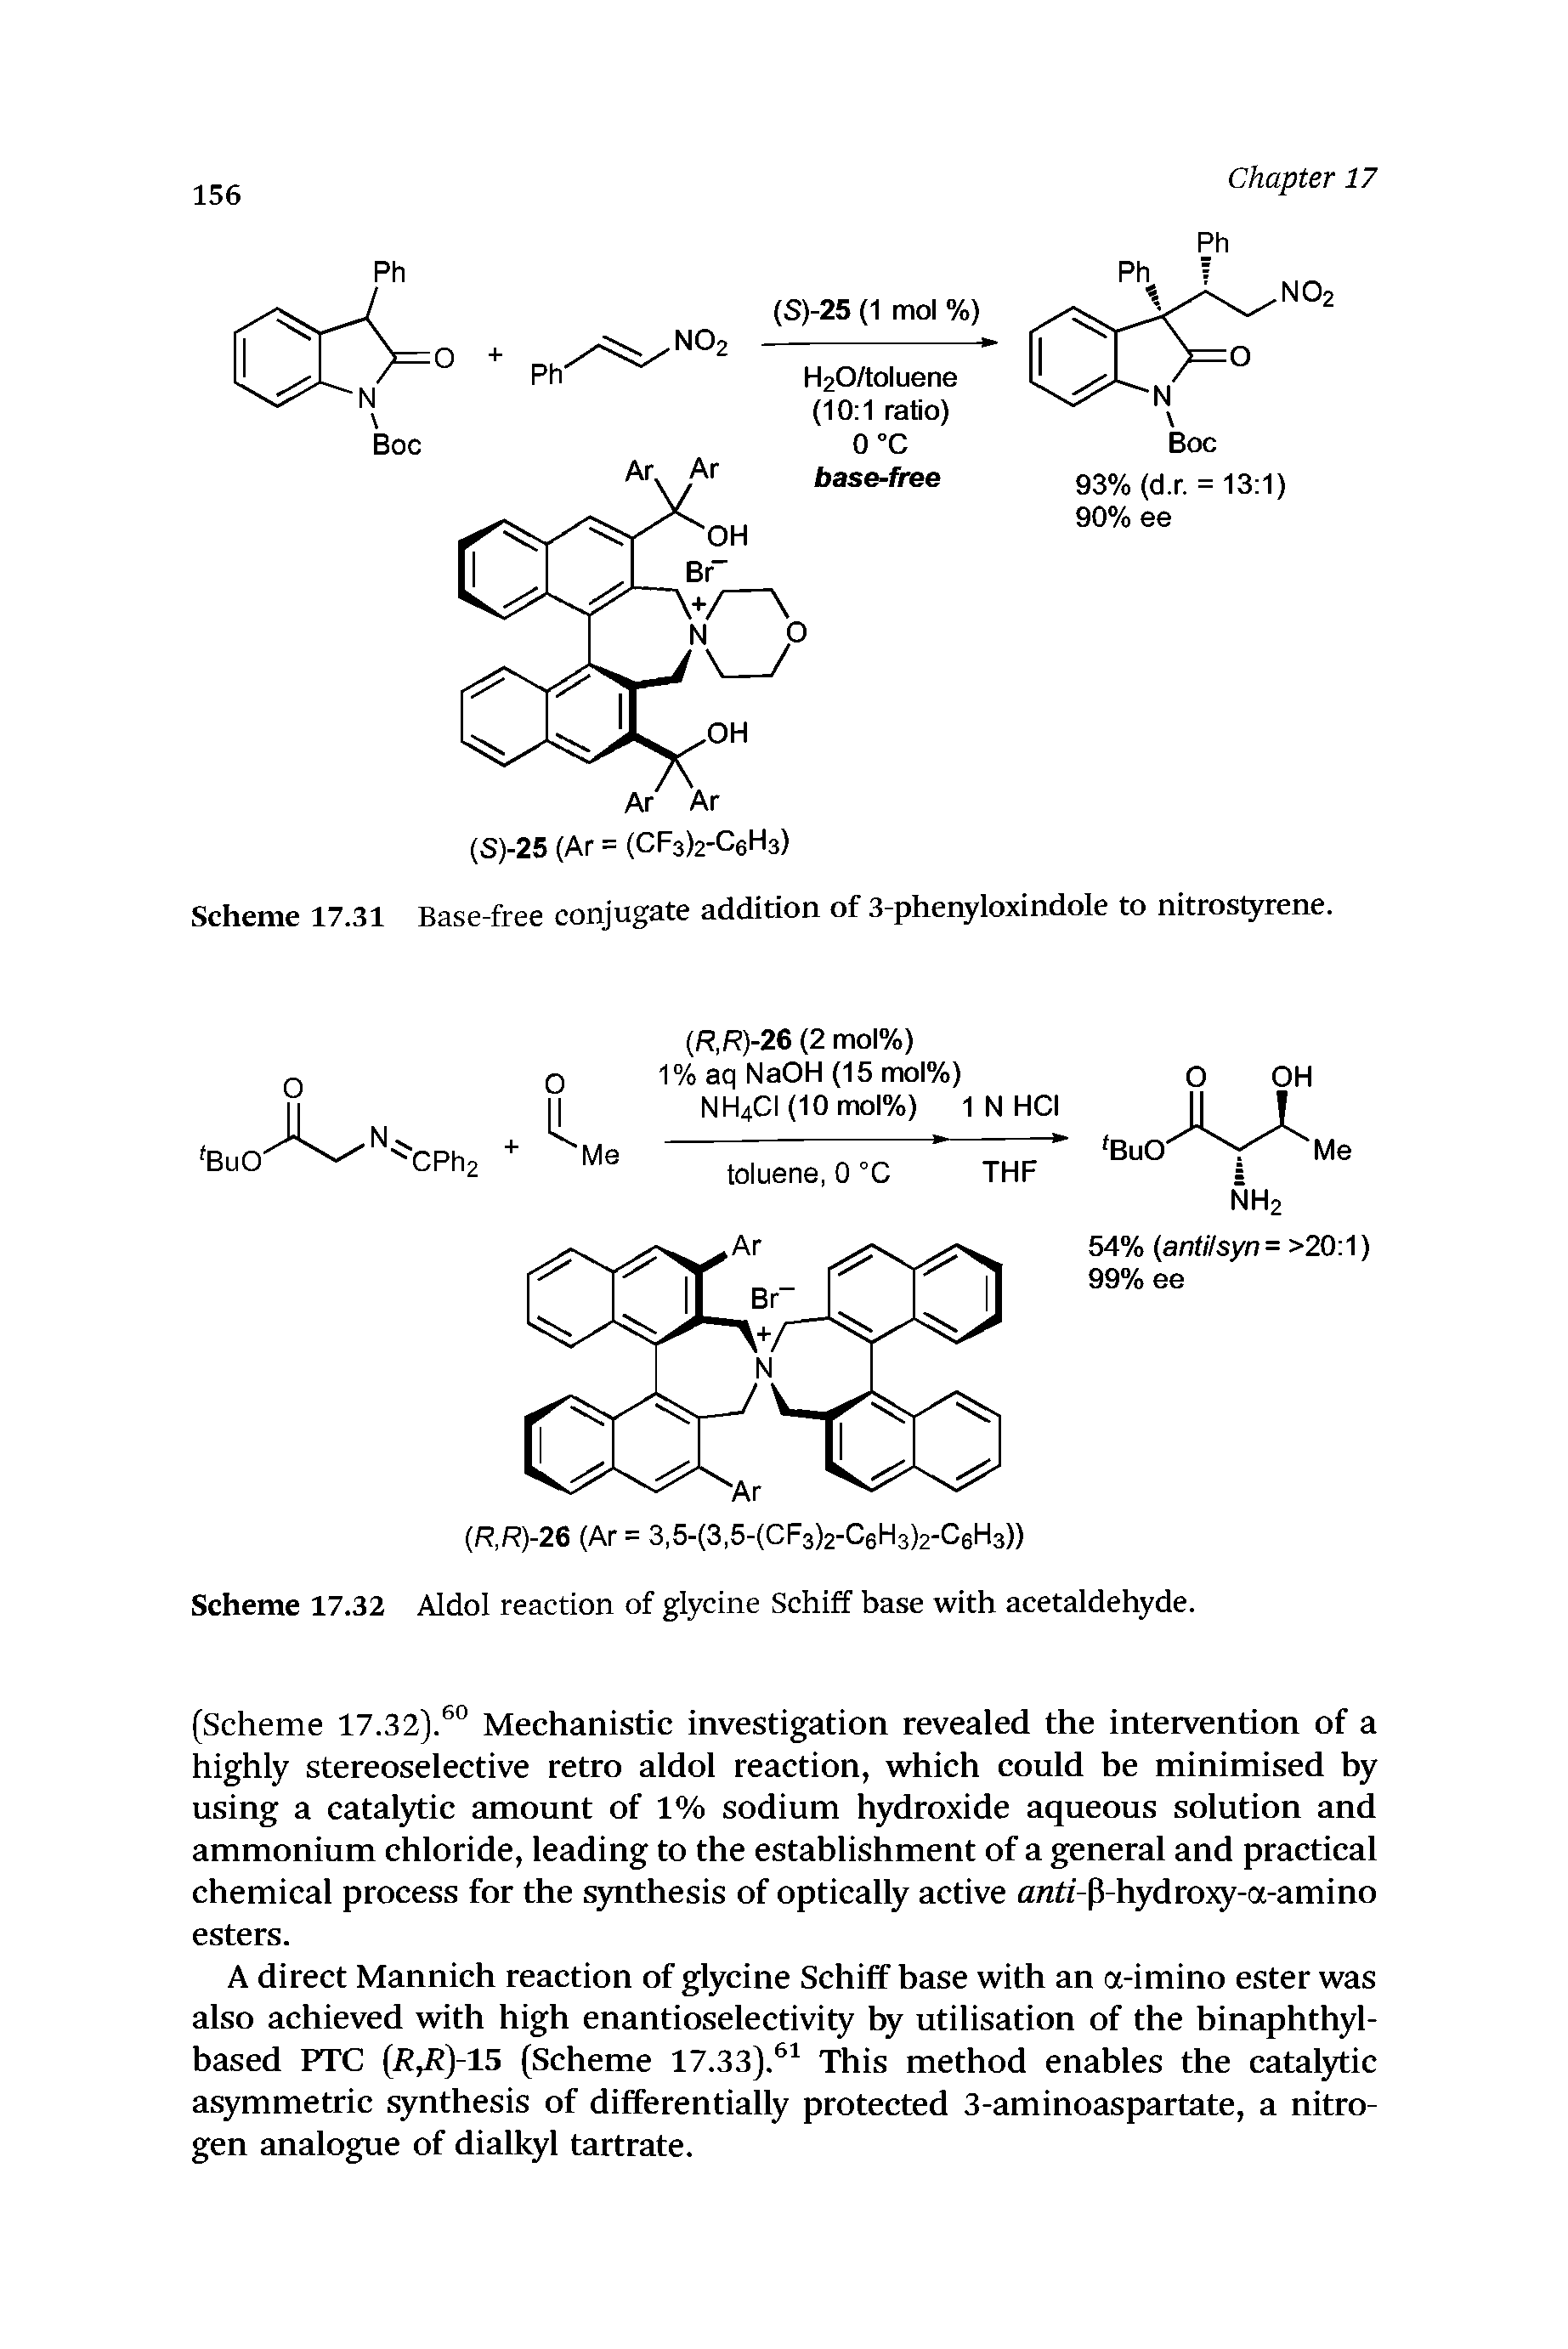 Scheme 17.32 Aldol reaction of glycine Schiff base with acetaldehyde.